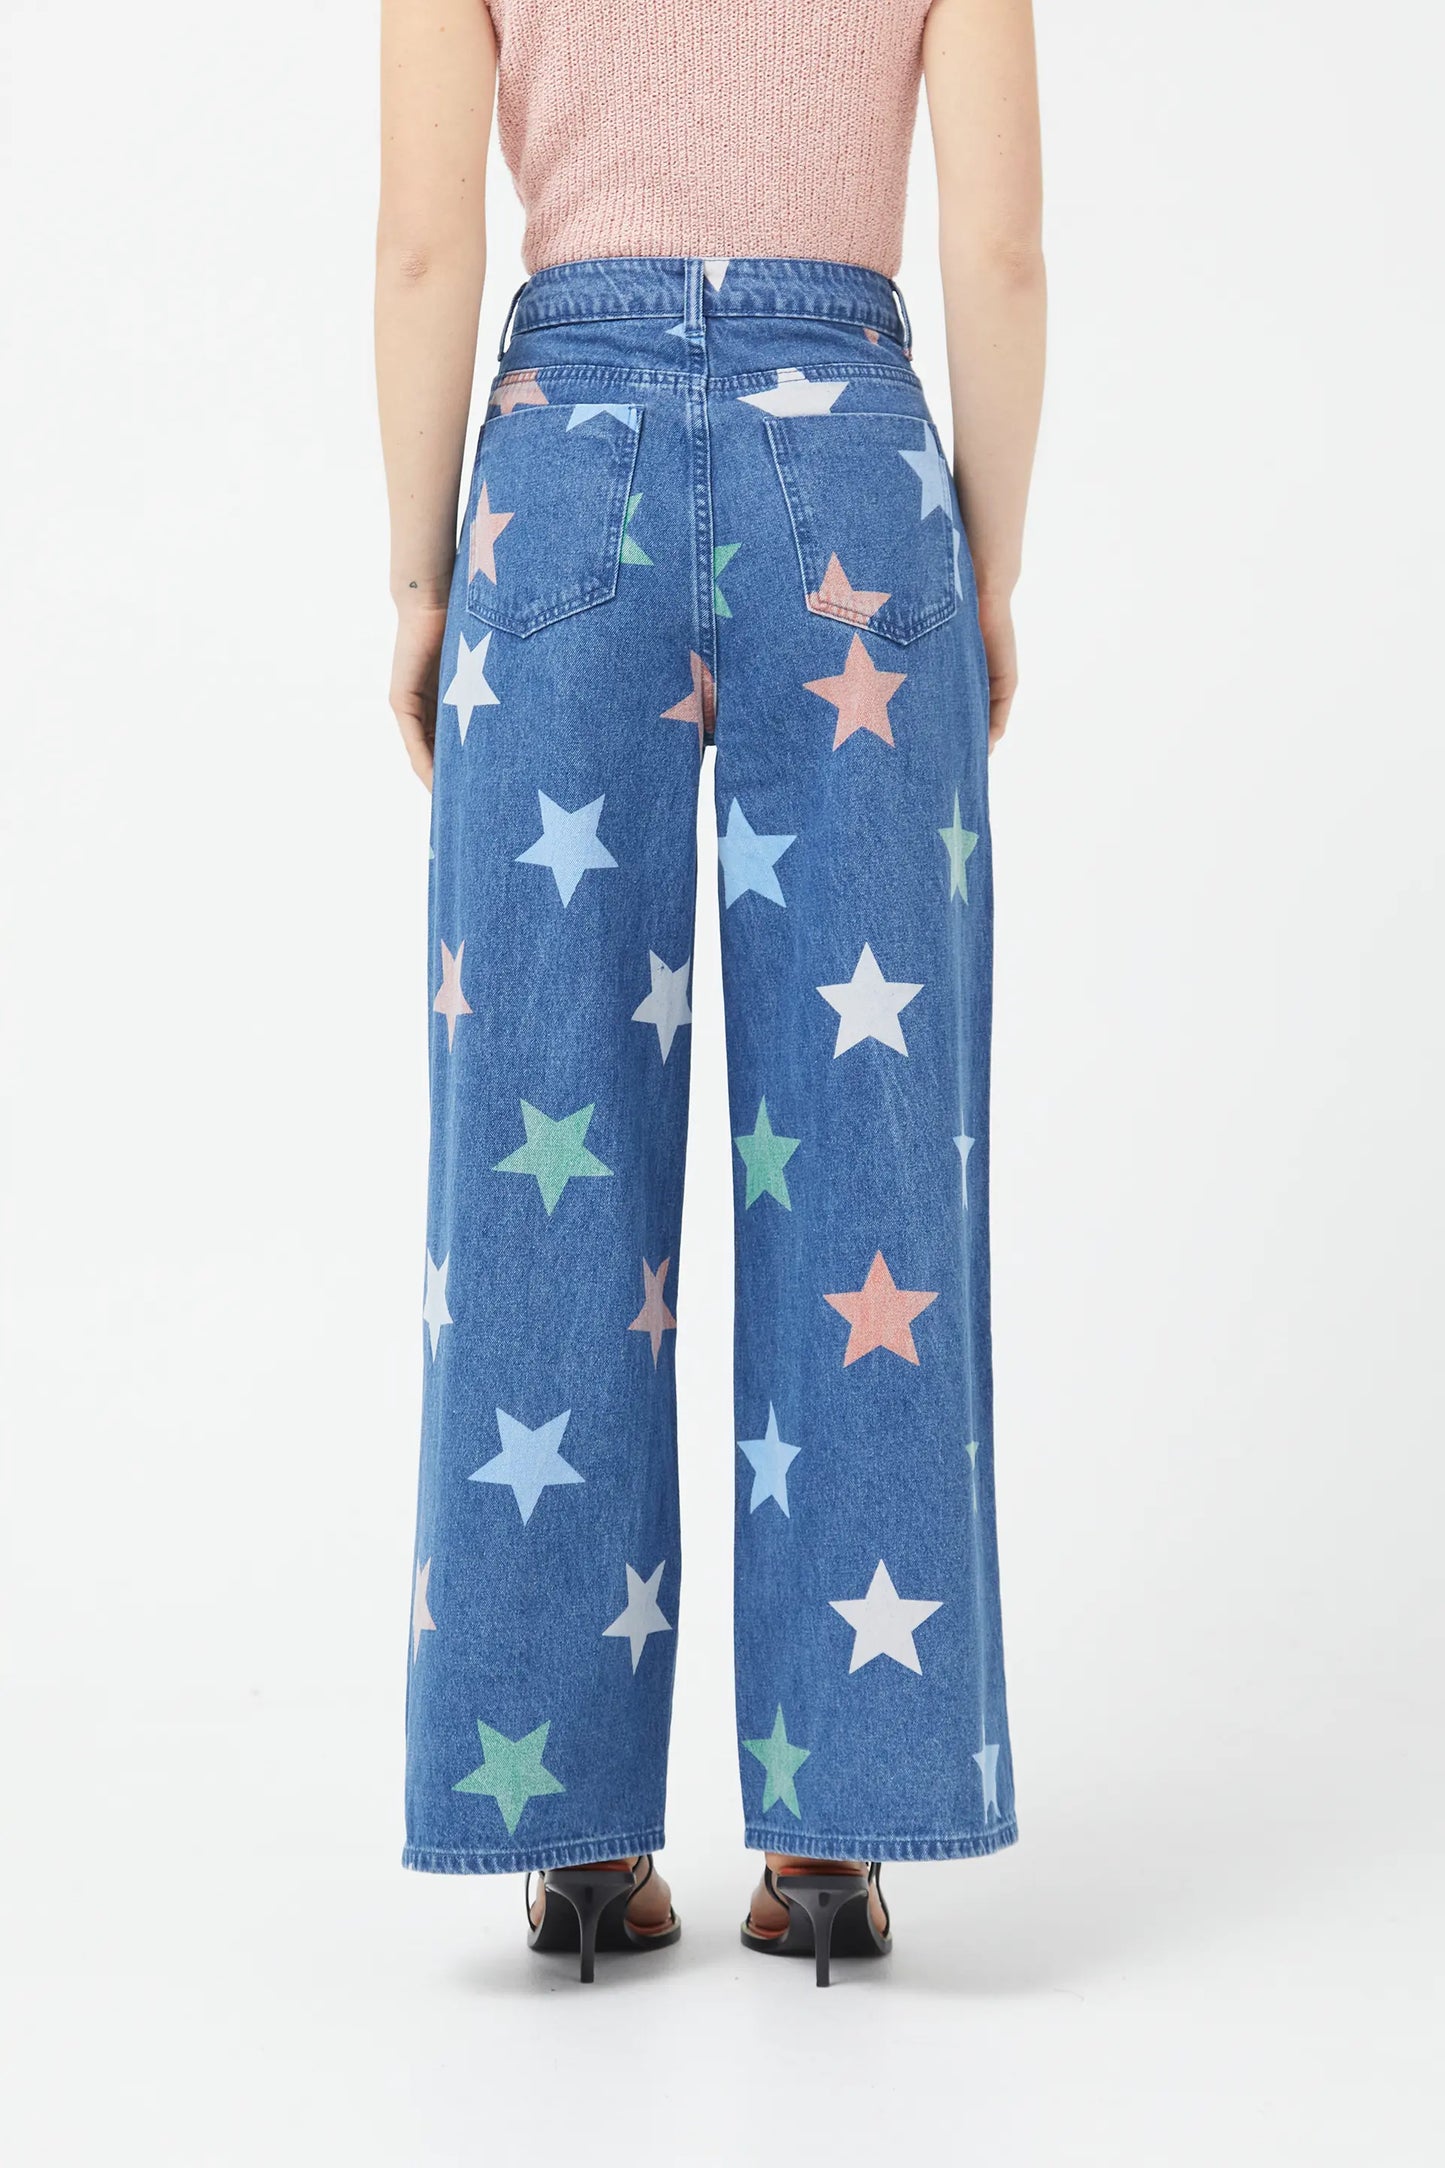 Star print jeans